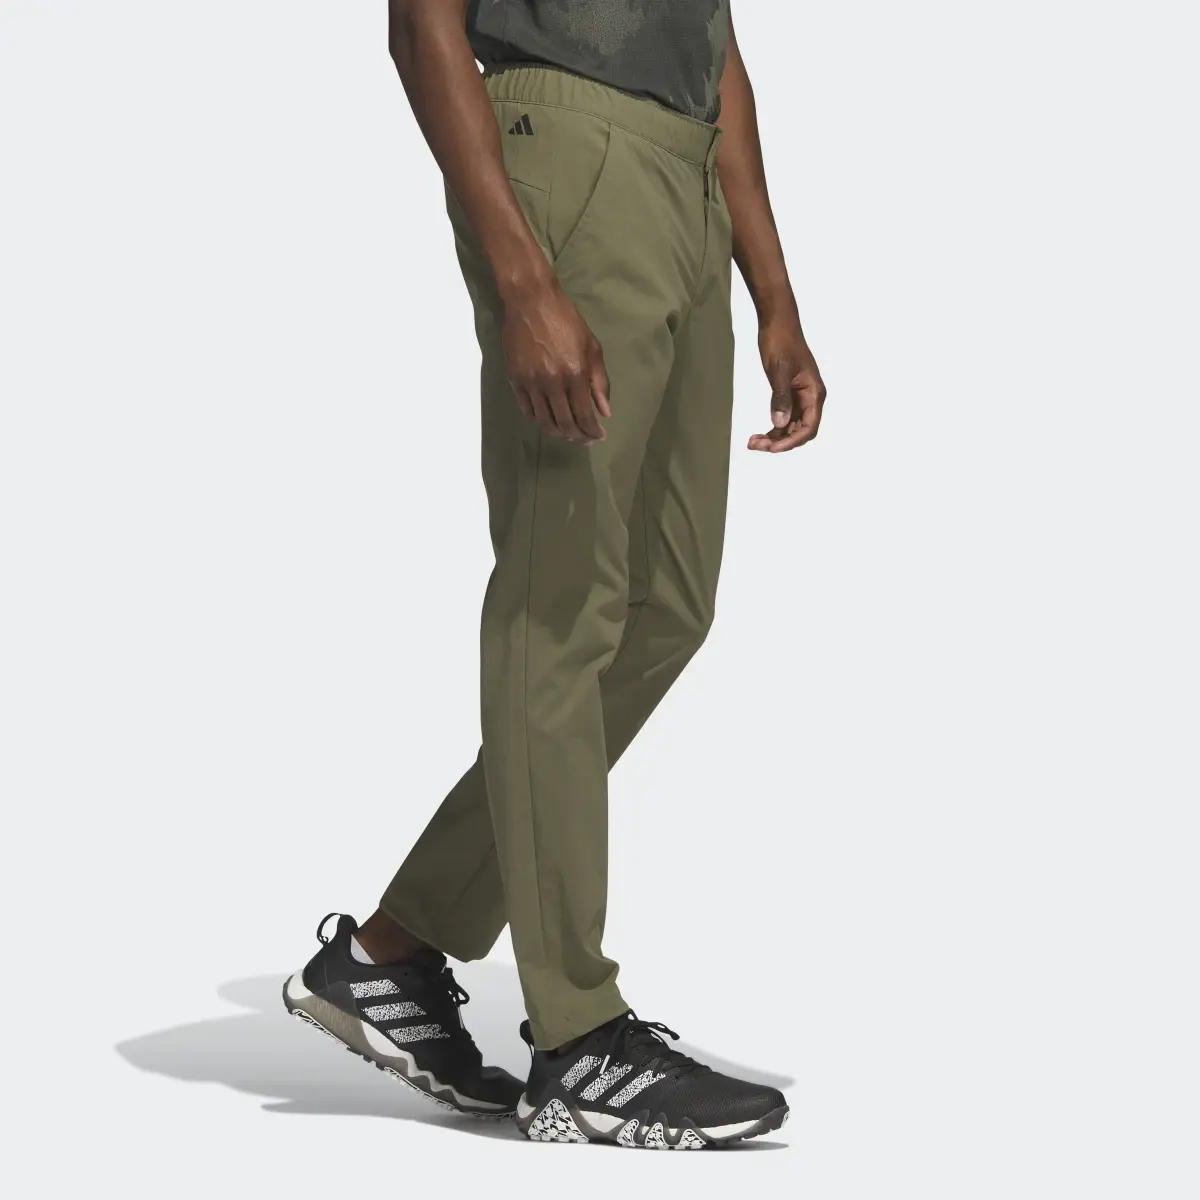 Adidas Ripstop Golf Pants. 3